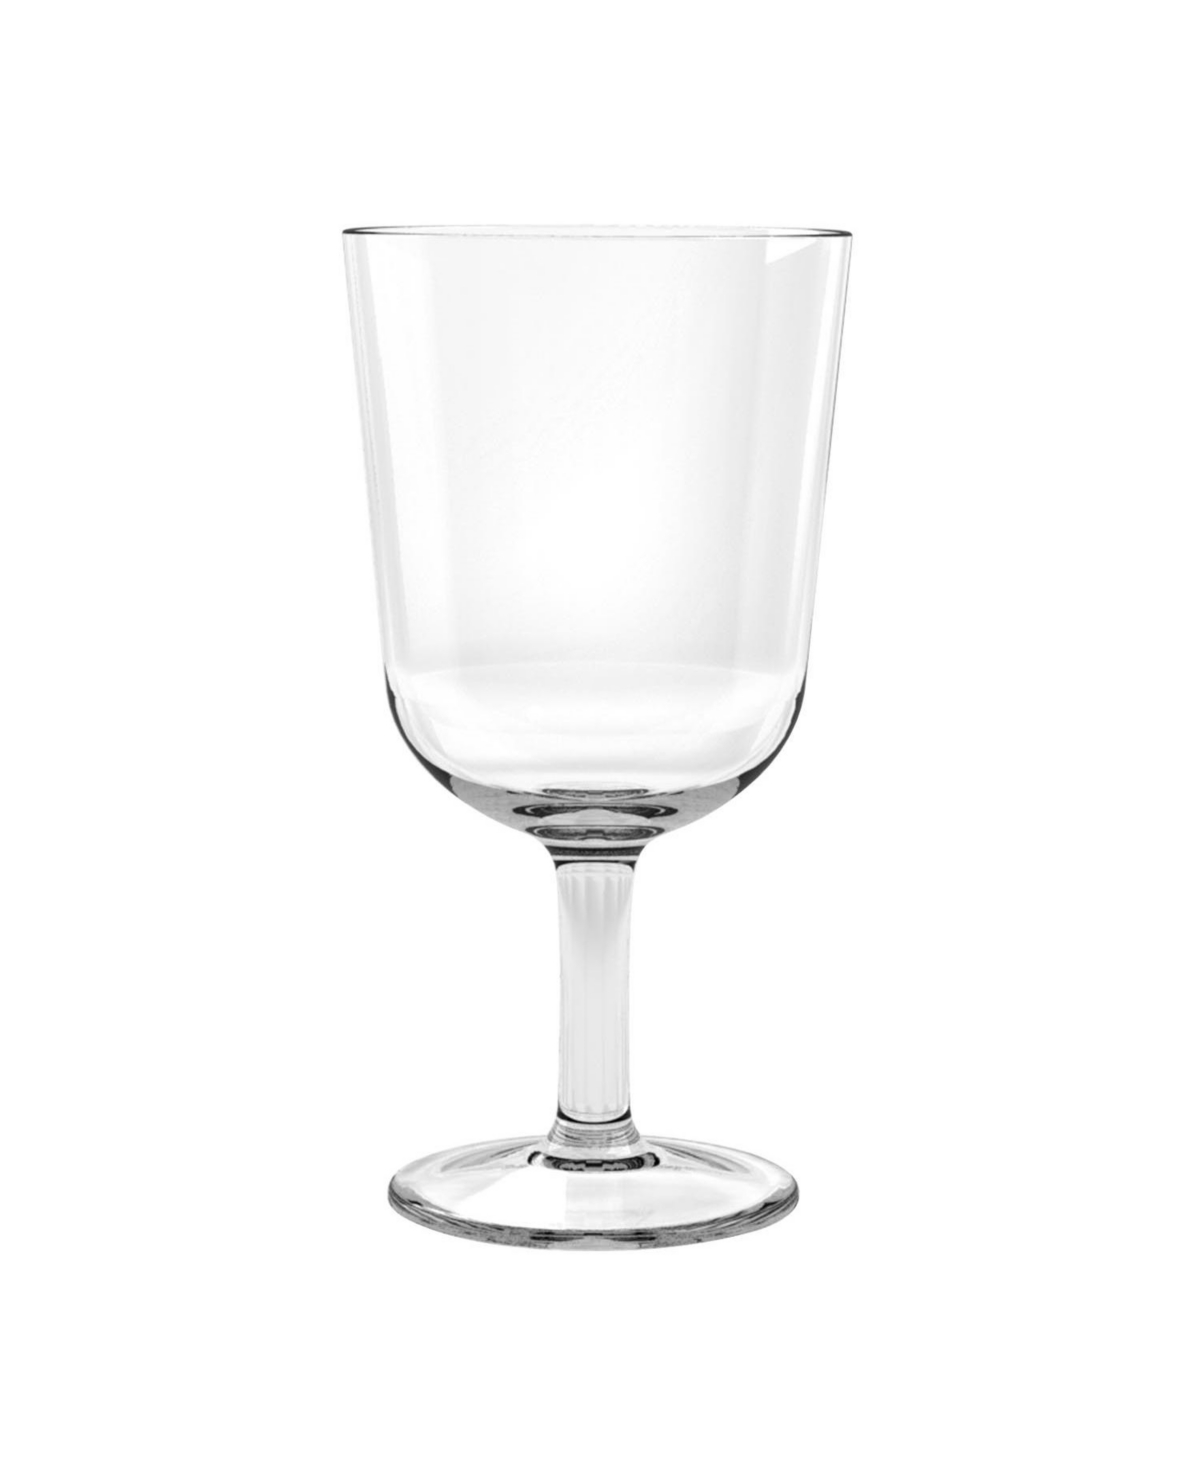 Simple Wine Glass, Clear, 16 oz., Premium Plastic, Set of 6 - Clear